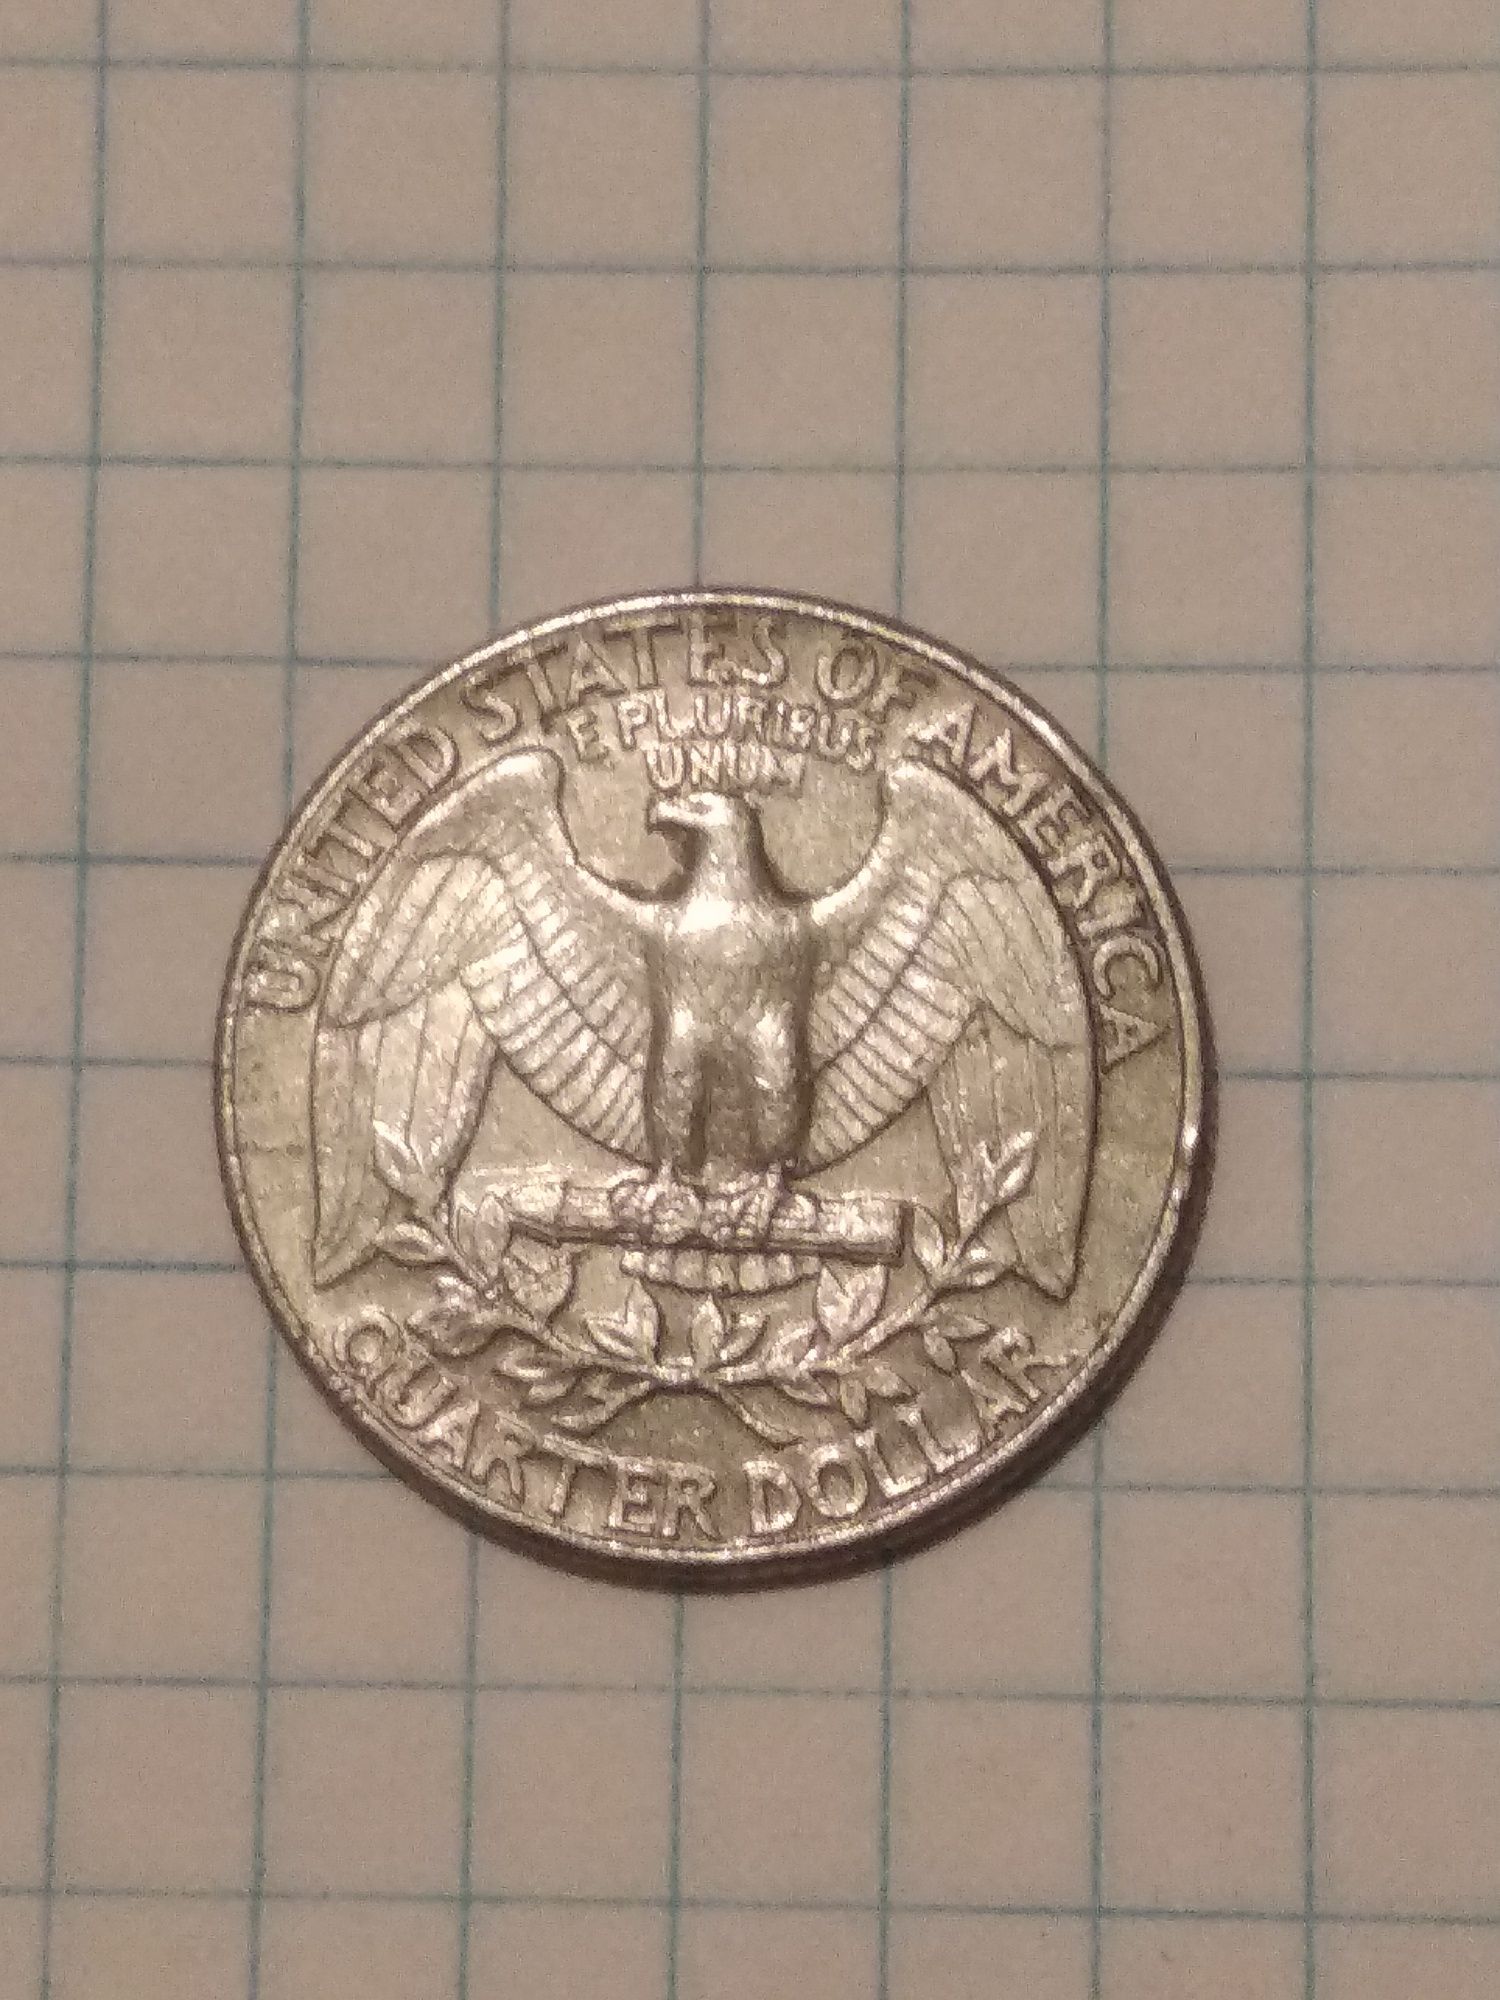 Liberty Доллар США монета 1988(ОРИГИНАЛ)